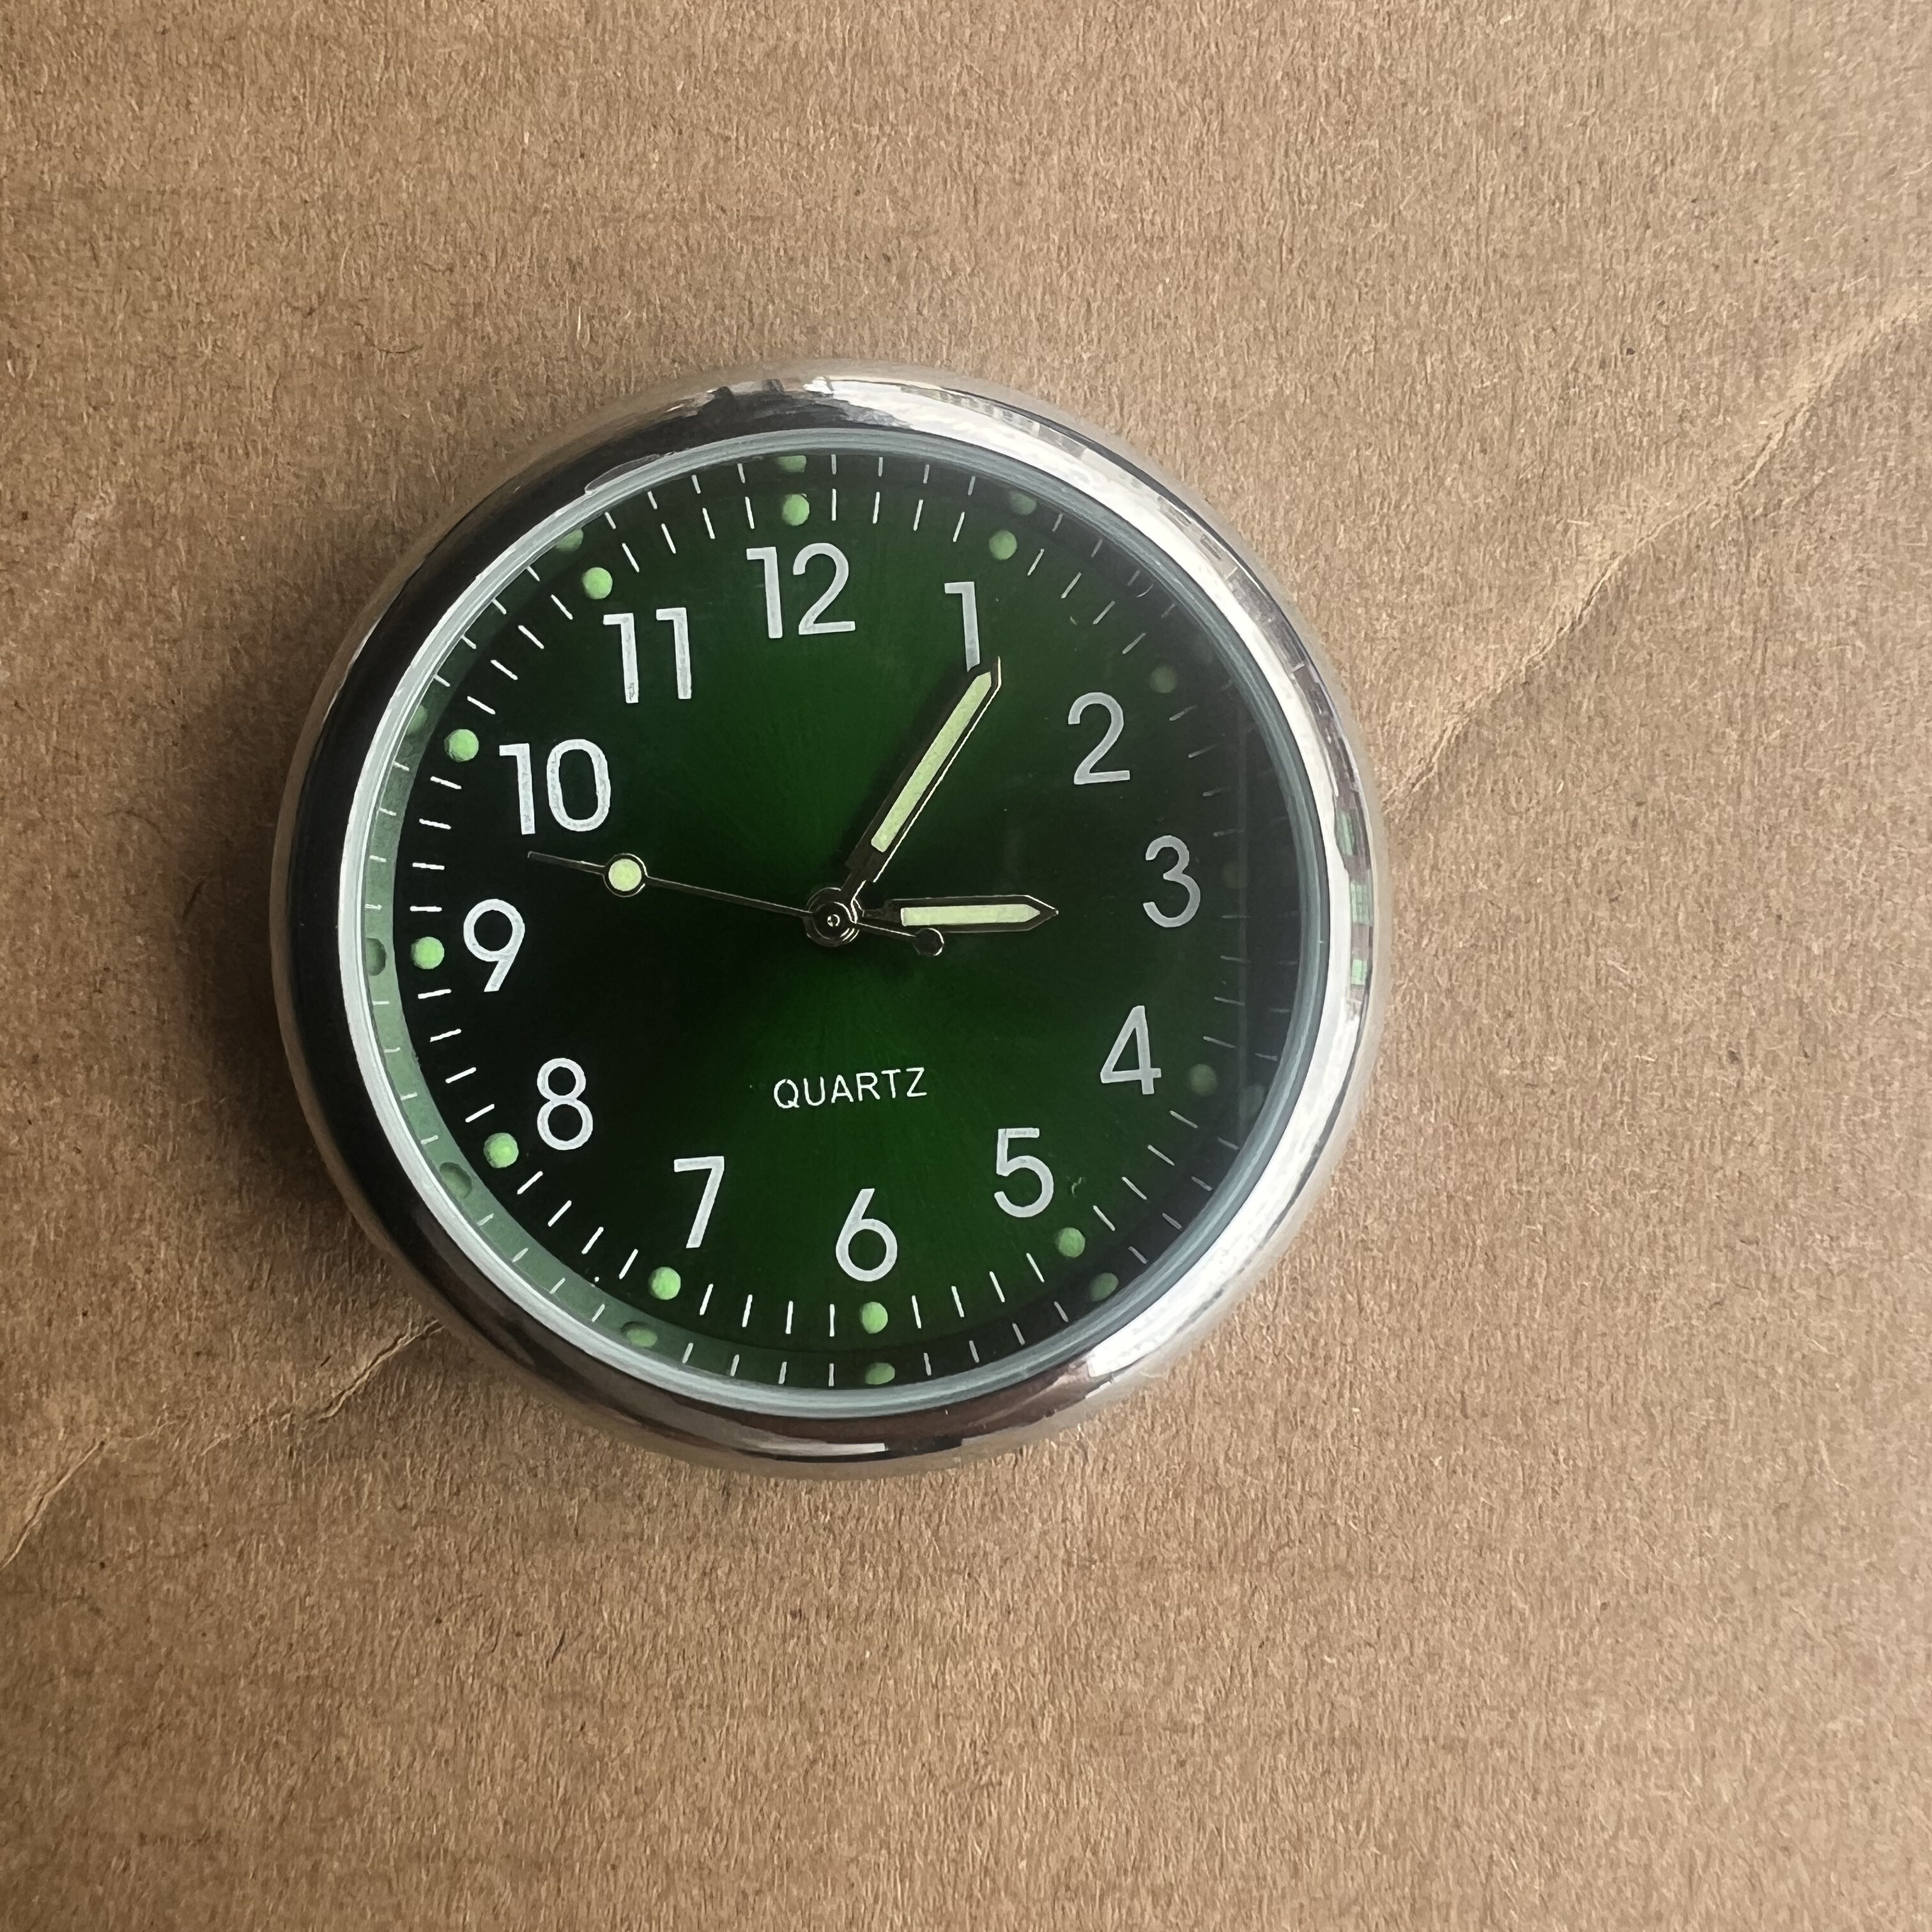 Jedew Car Clock, Mini Quartz Analogue Car Dashboard Clock Time